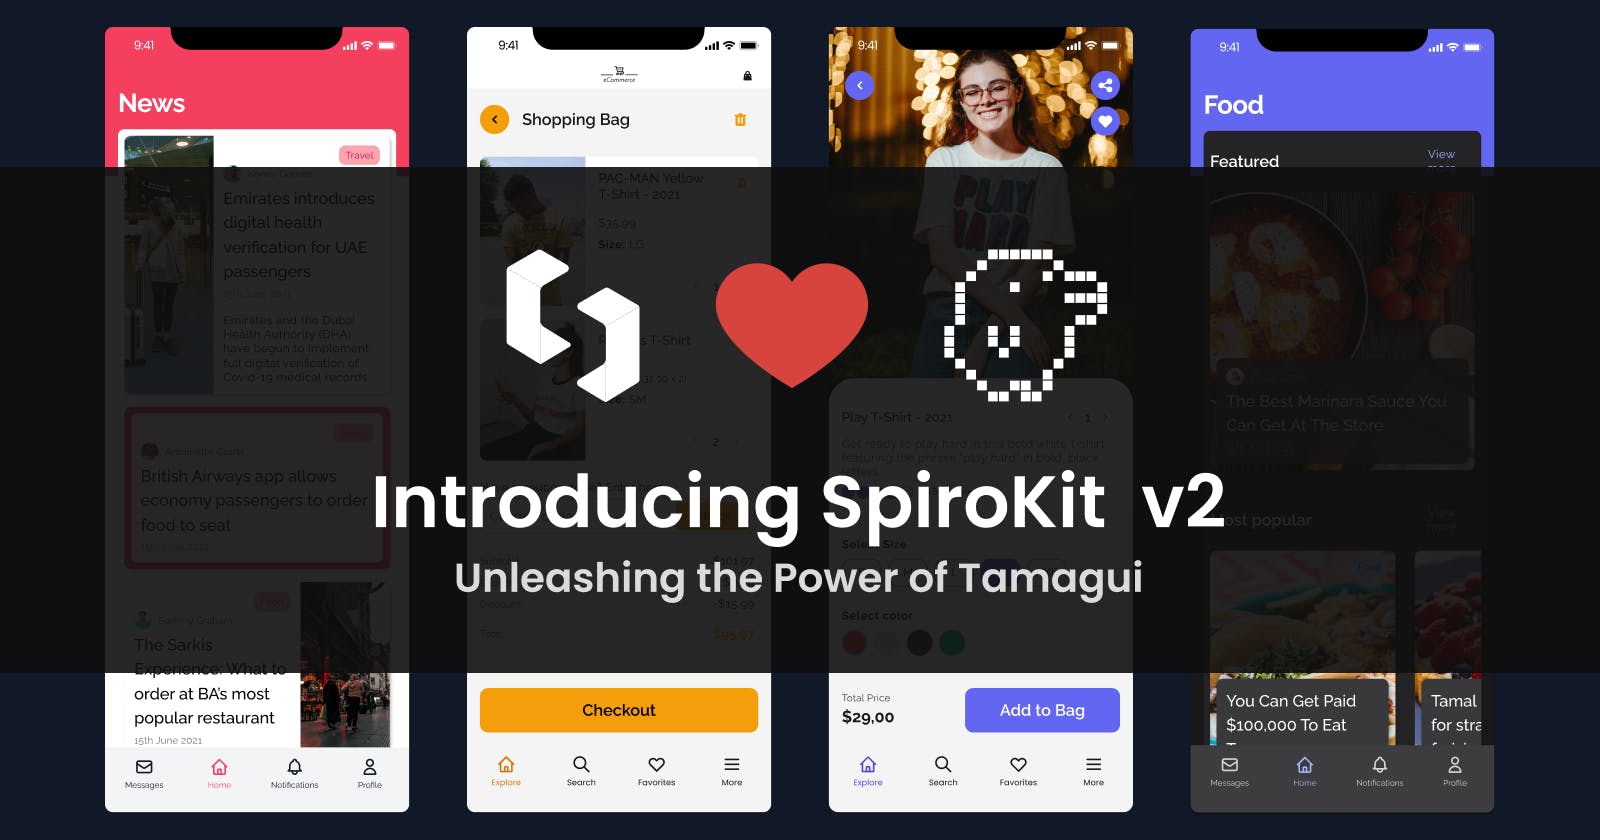 Introducing SpiroKit v2: 
Unleashing the Power of Tamagui